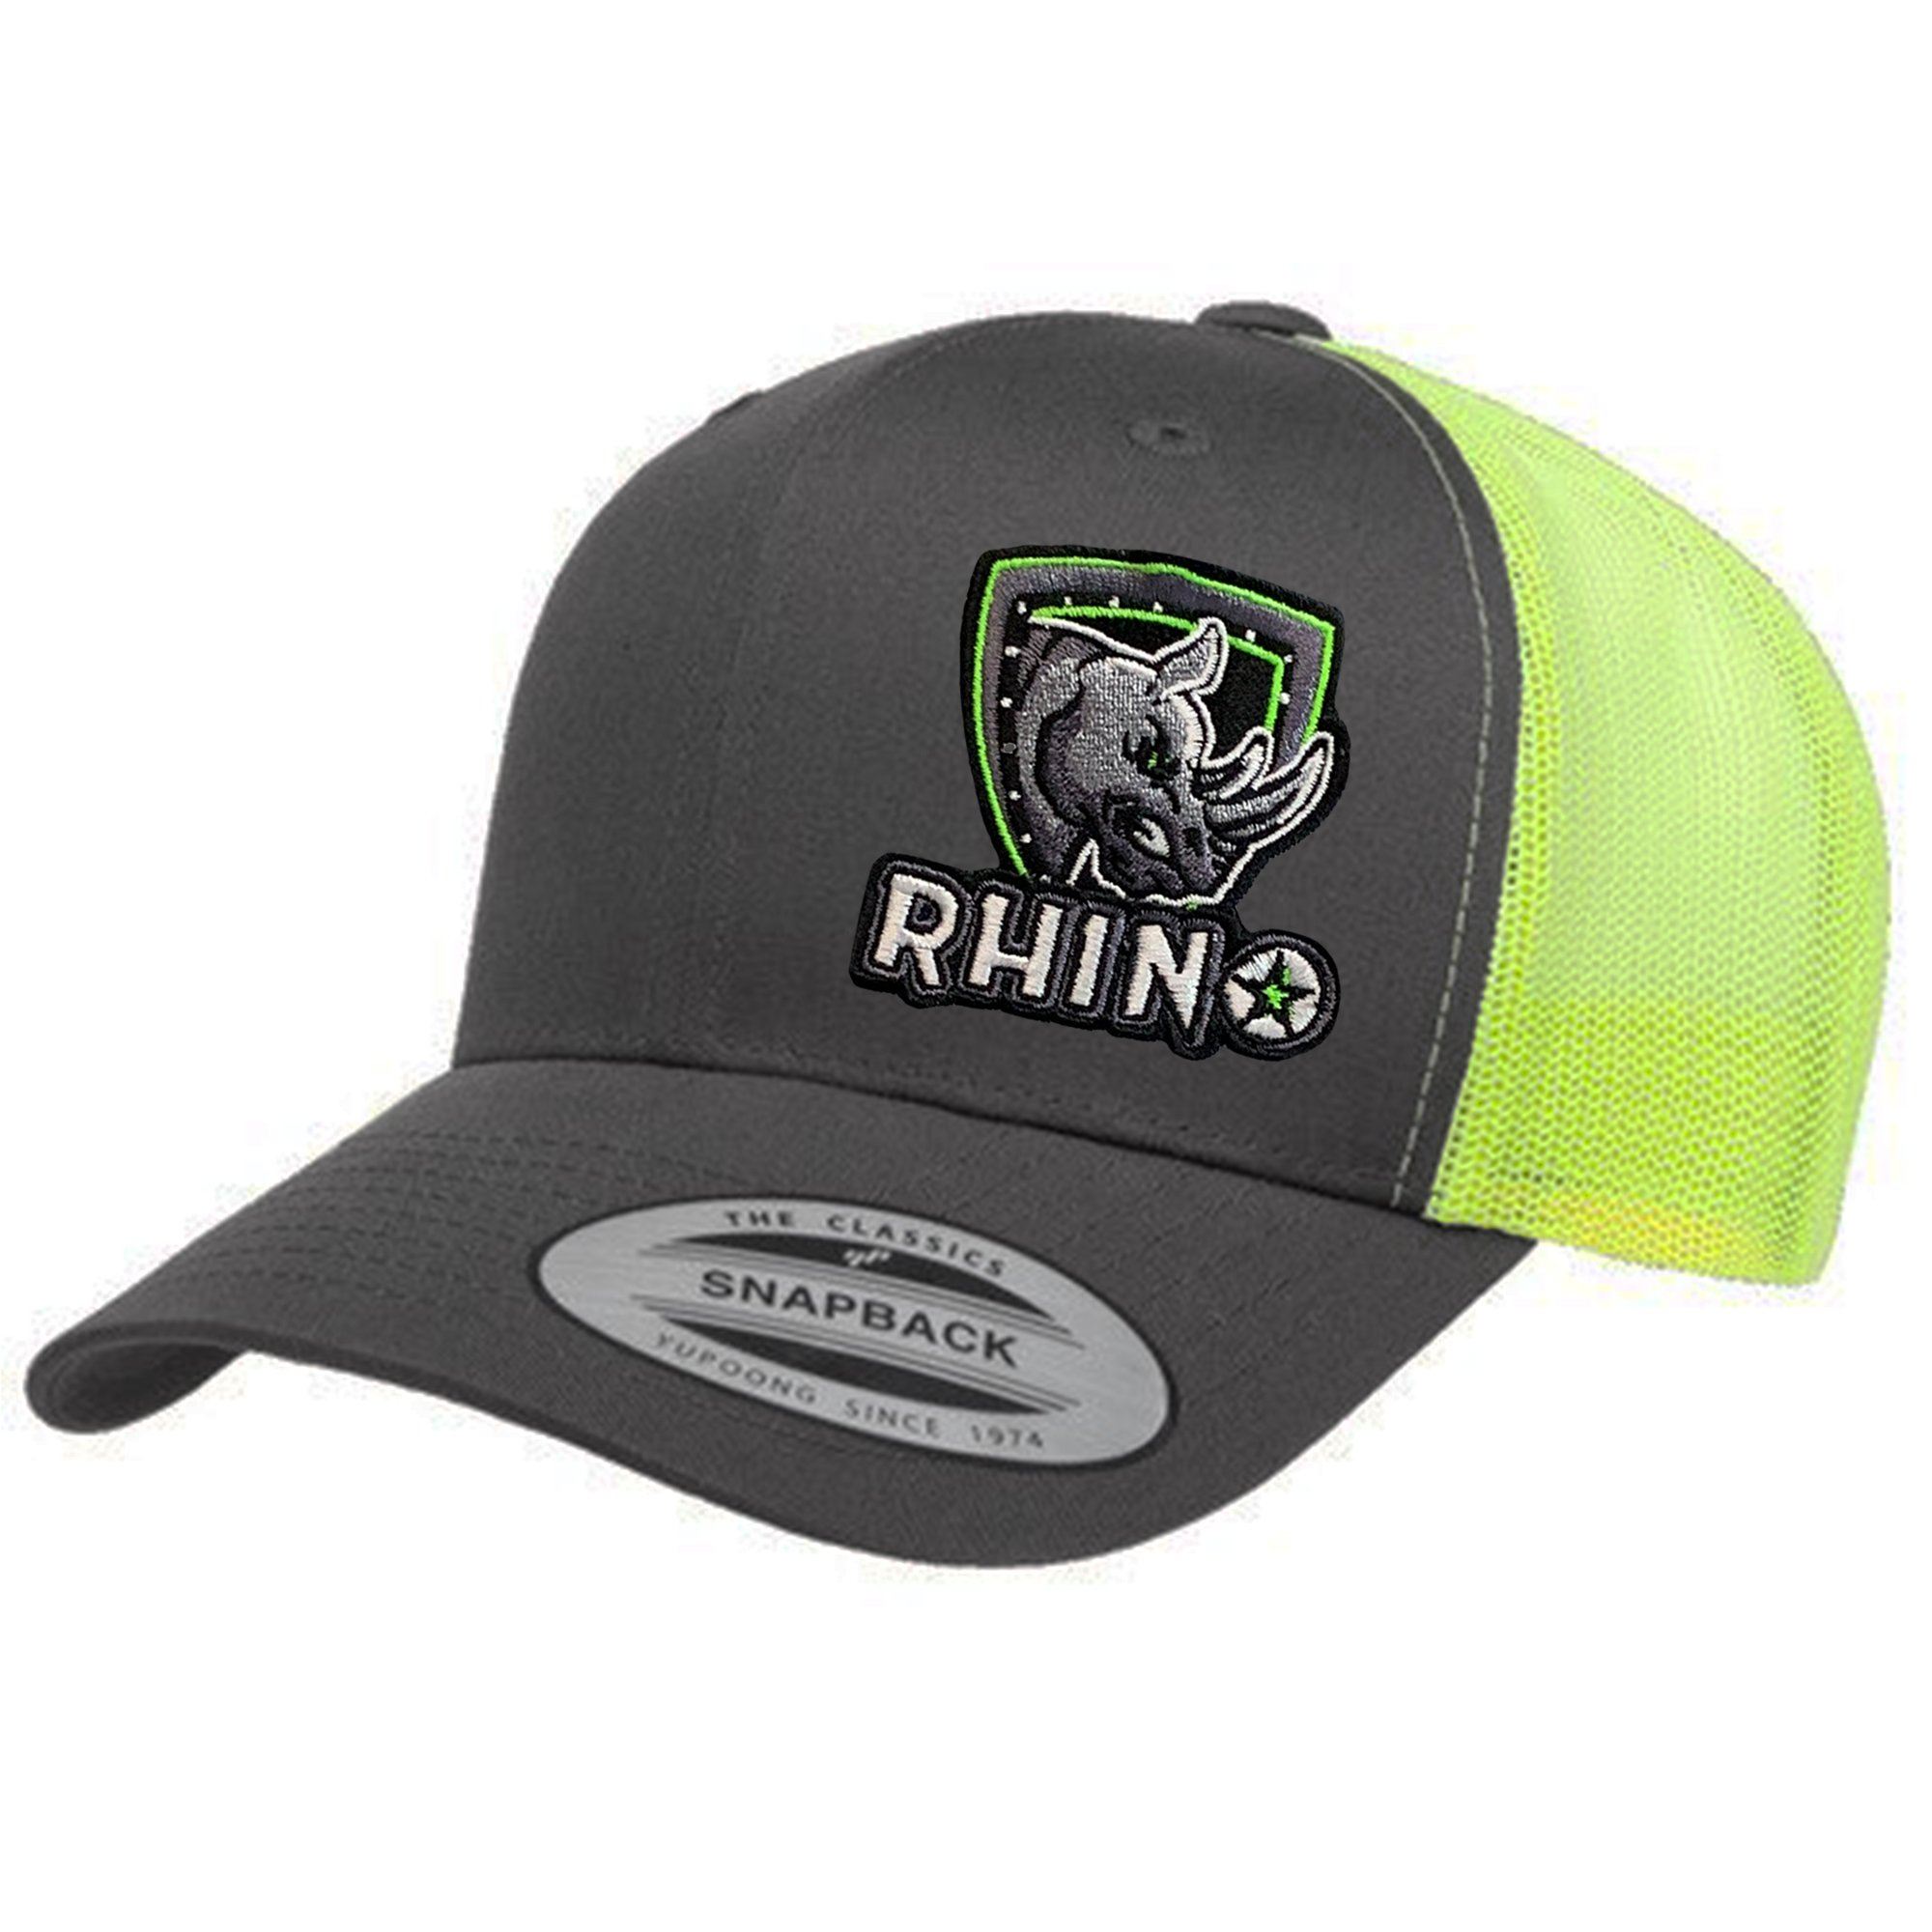 Mesh Snapback - Curved Bill Caps Rhino USA, Inc. Charcoal/Neon 